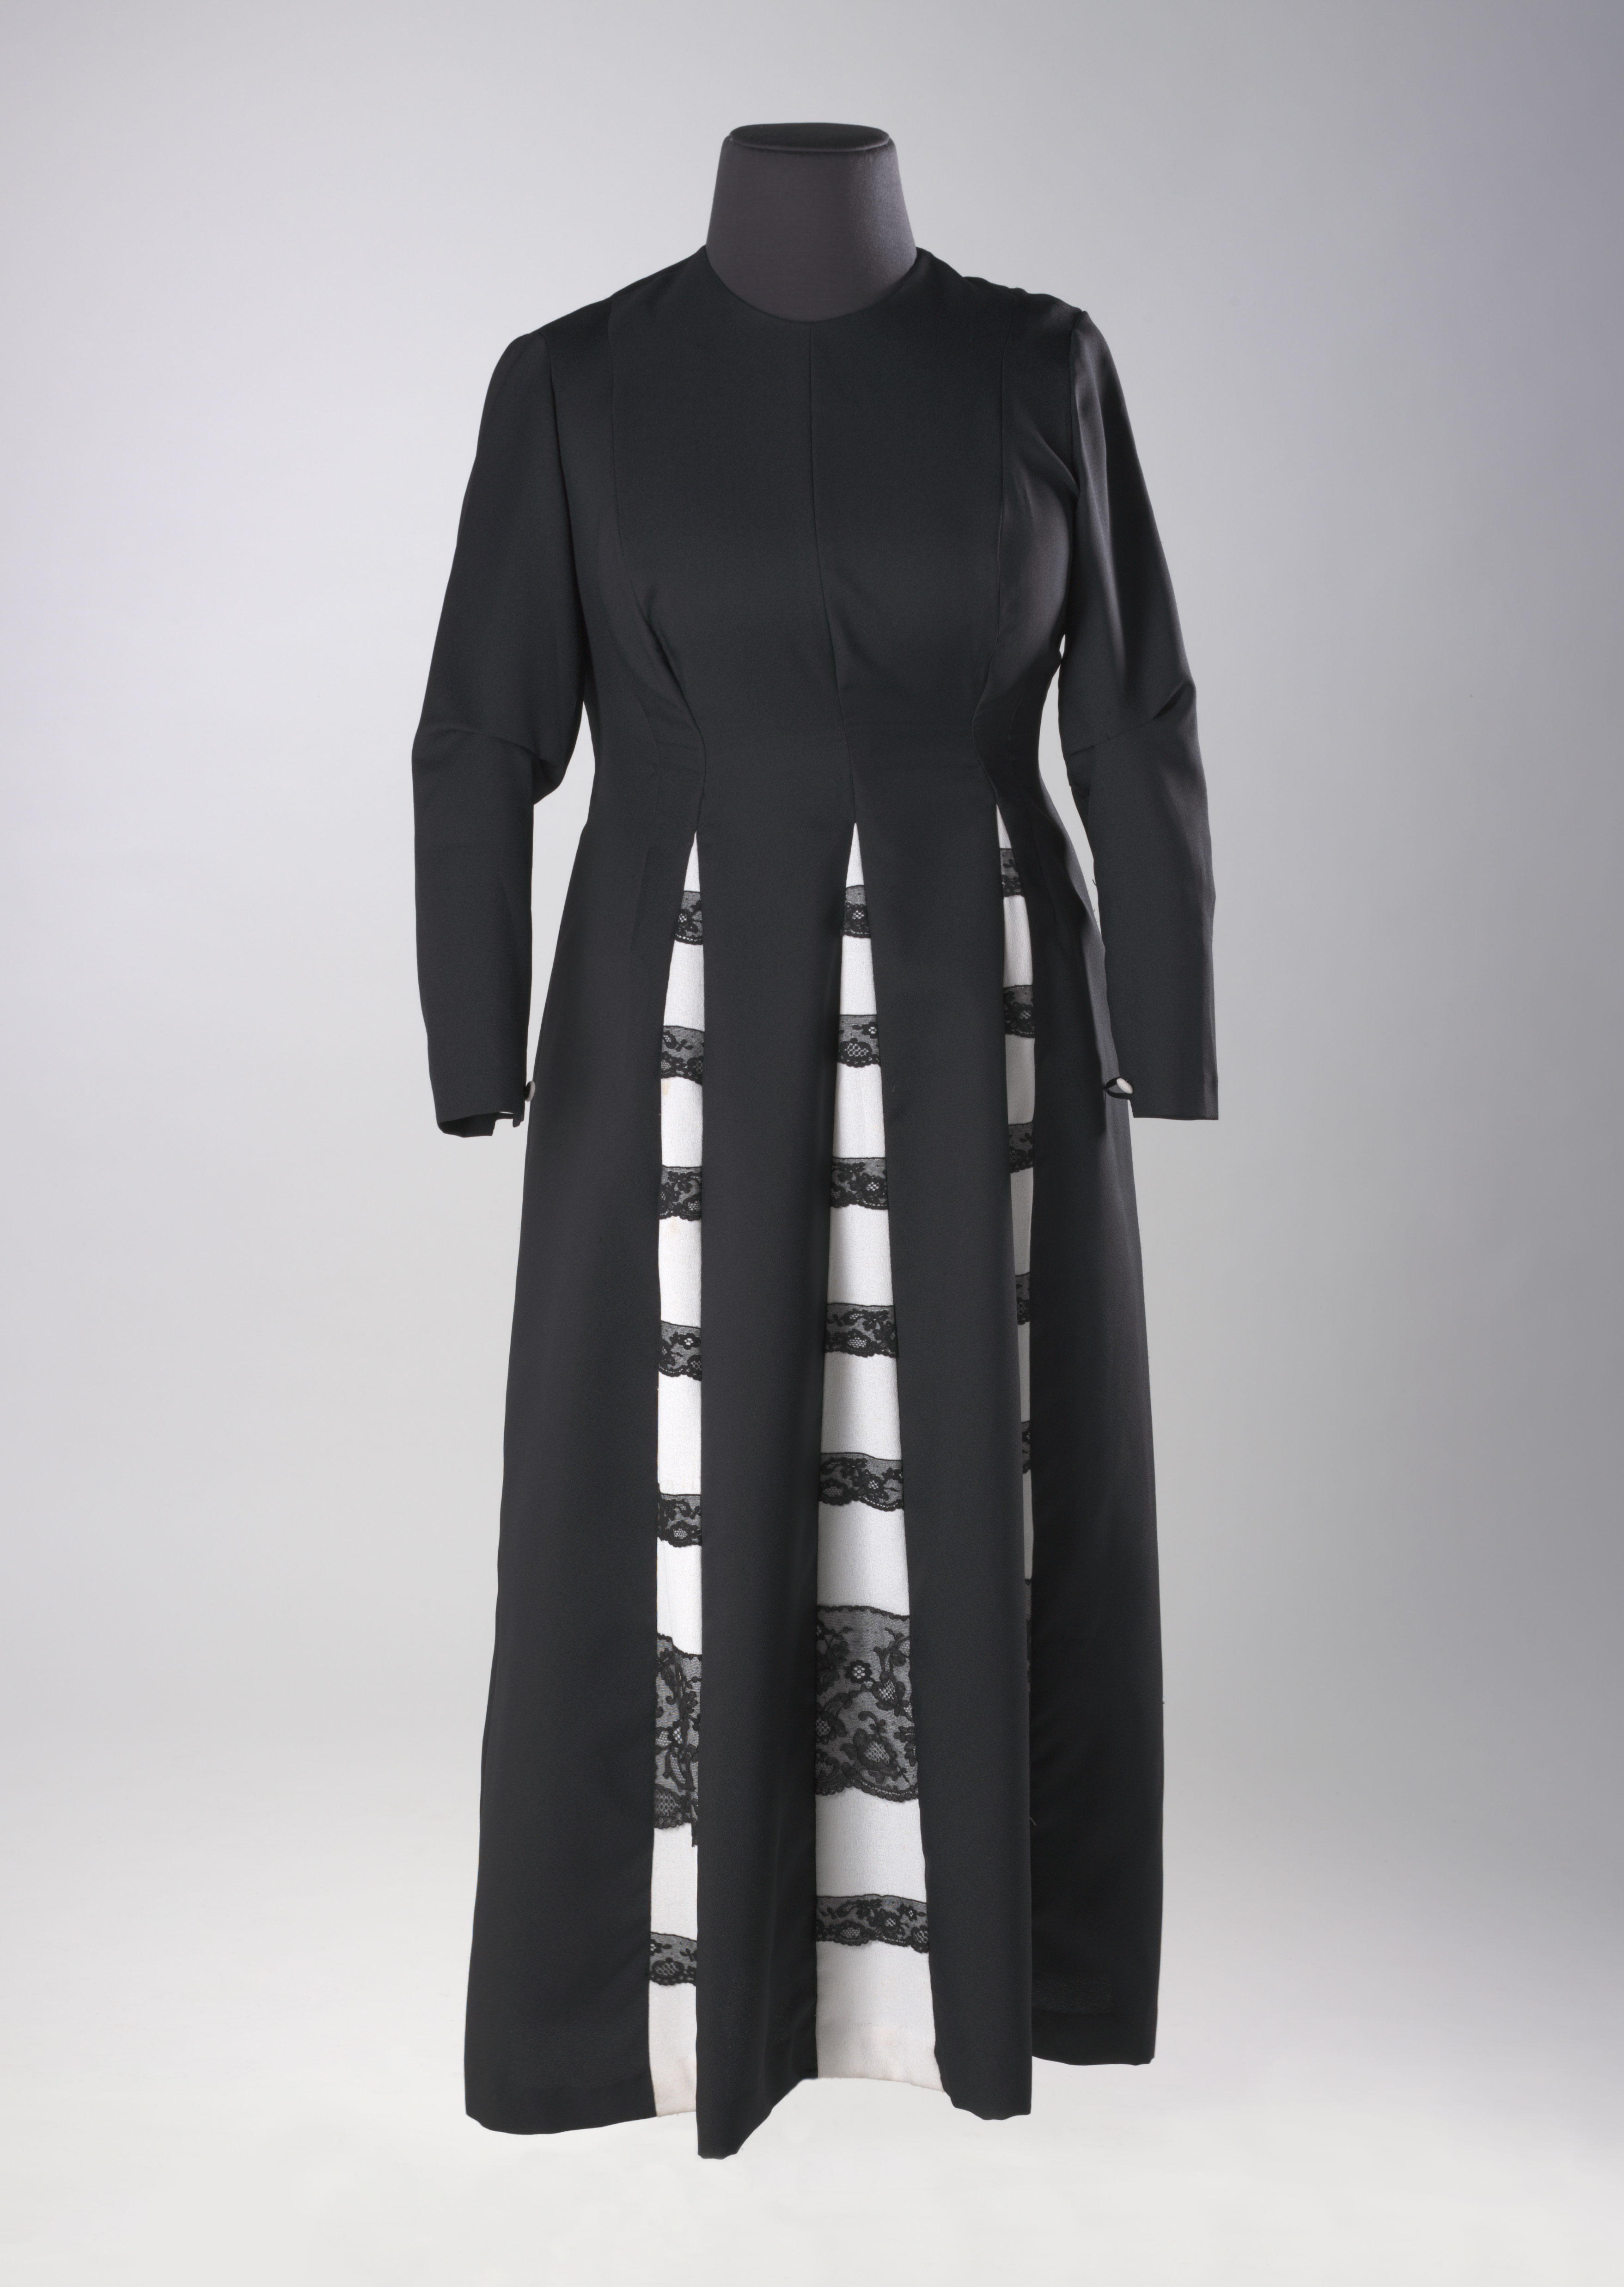 Dress worn by Dame Enid Lyons.